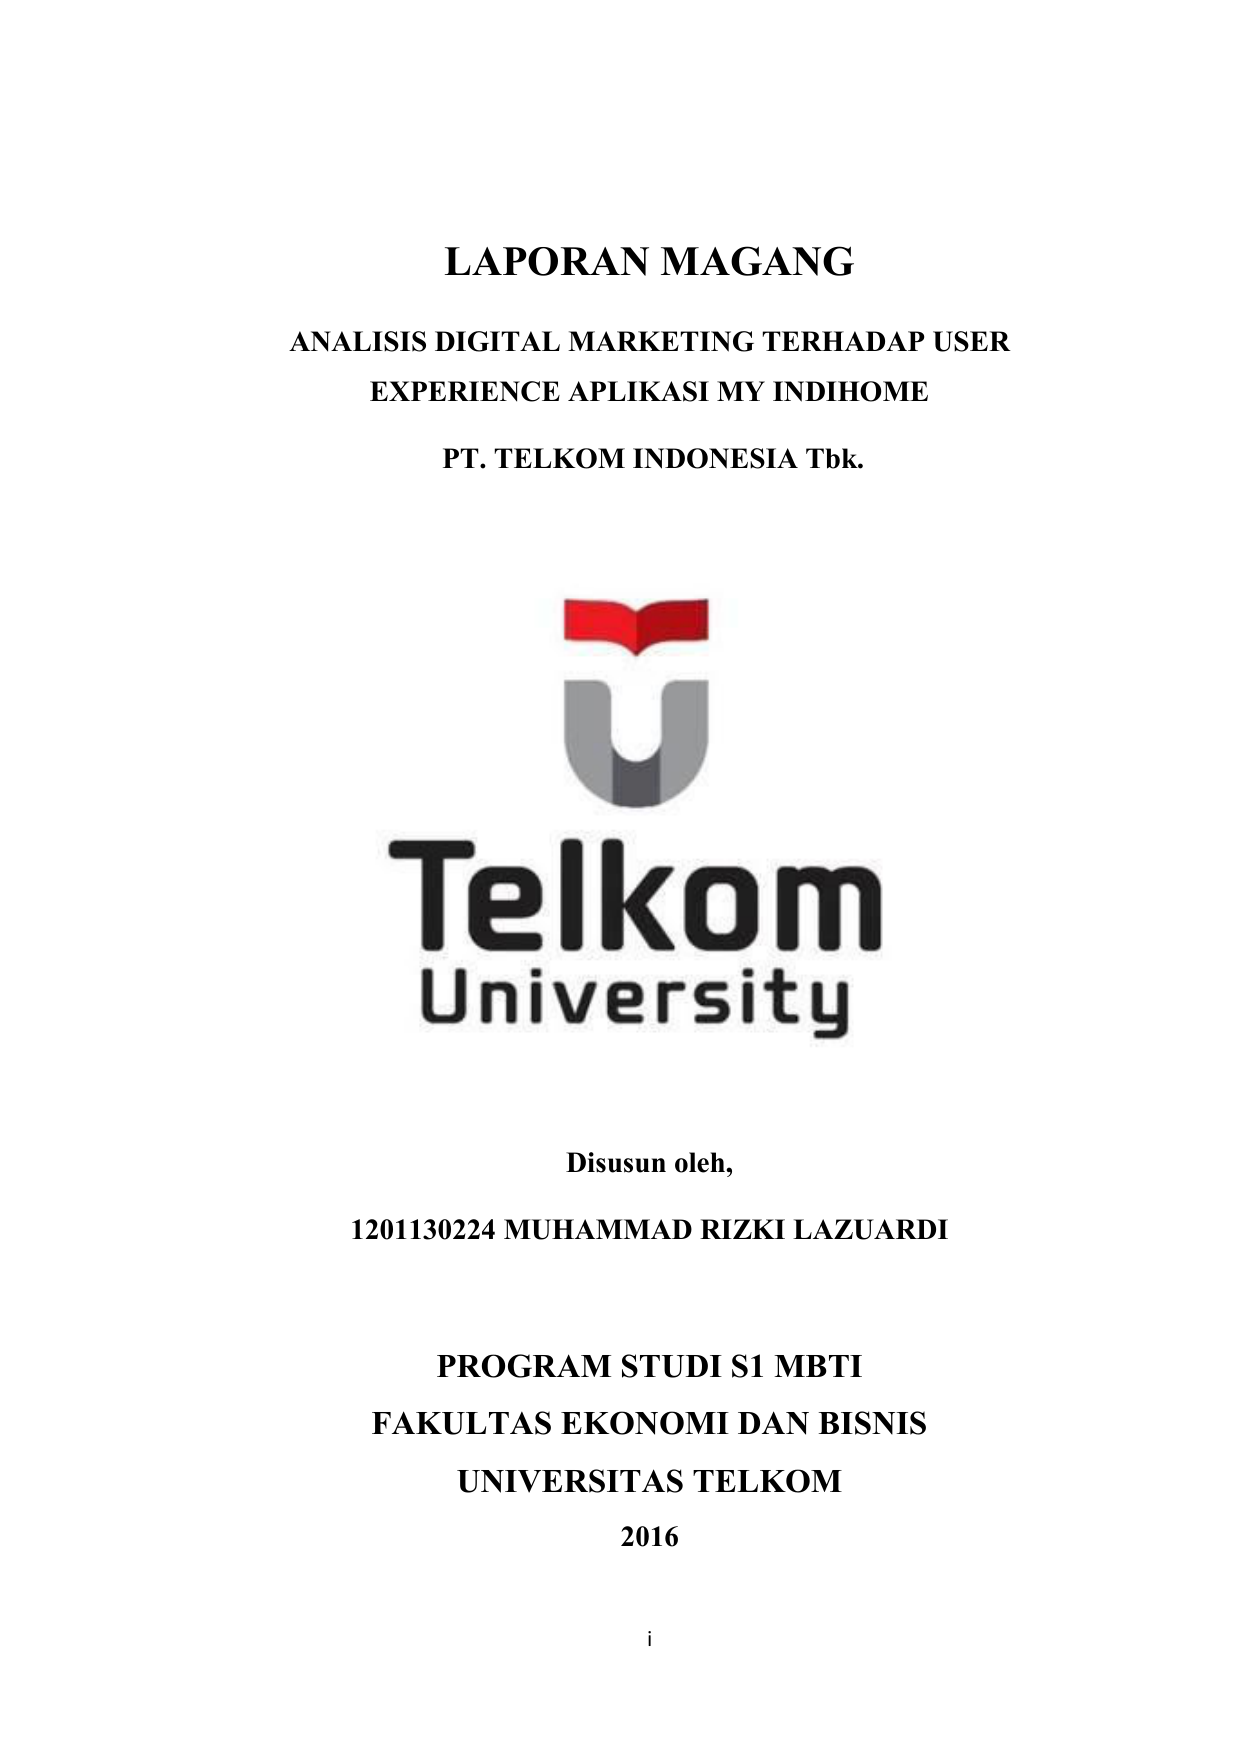 Laporan Magang Telkom University